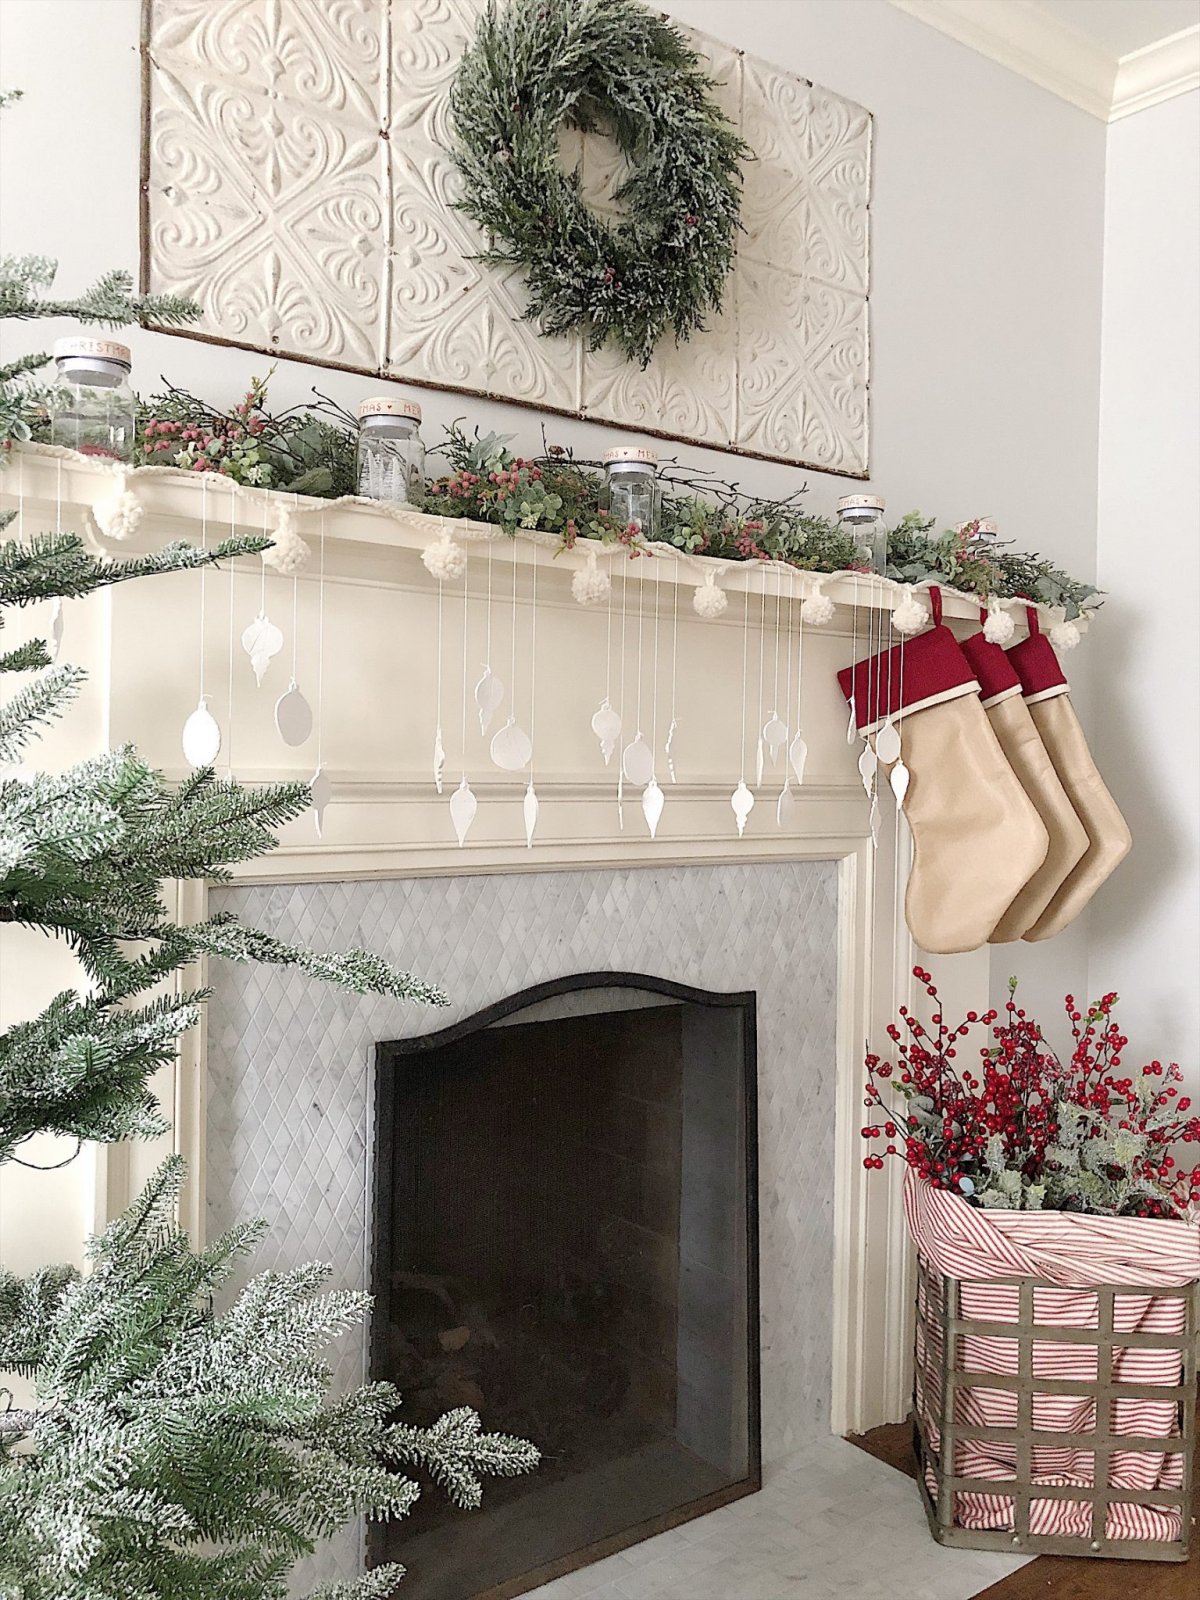 An Easy Christmas Centerpiece for a Long Table - Sanctuary Home Decor